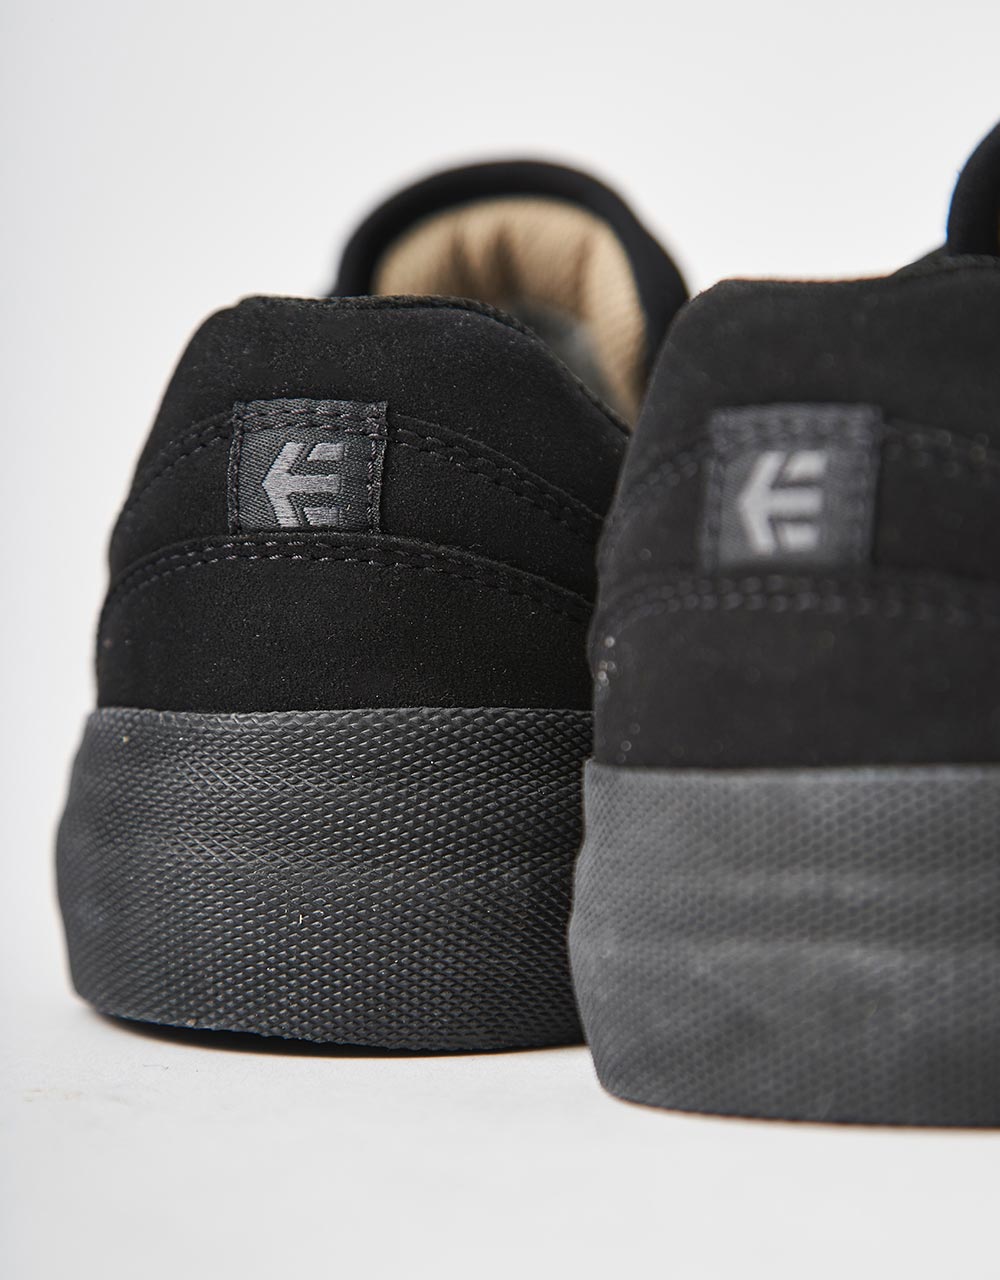 Etnies x Michelin Joslin Vulc Skate Shoes - Black/Black